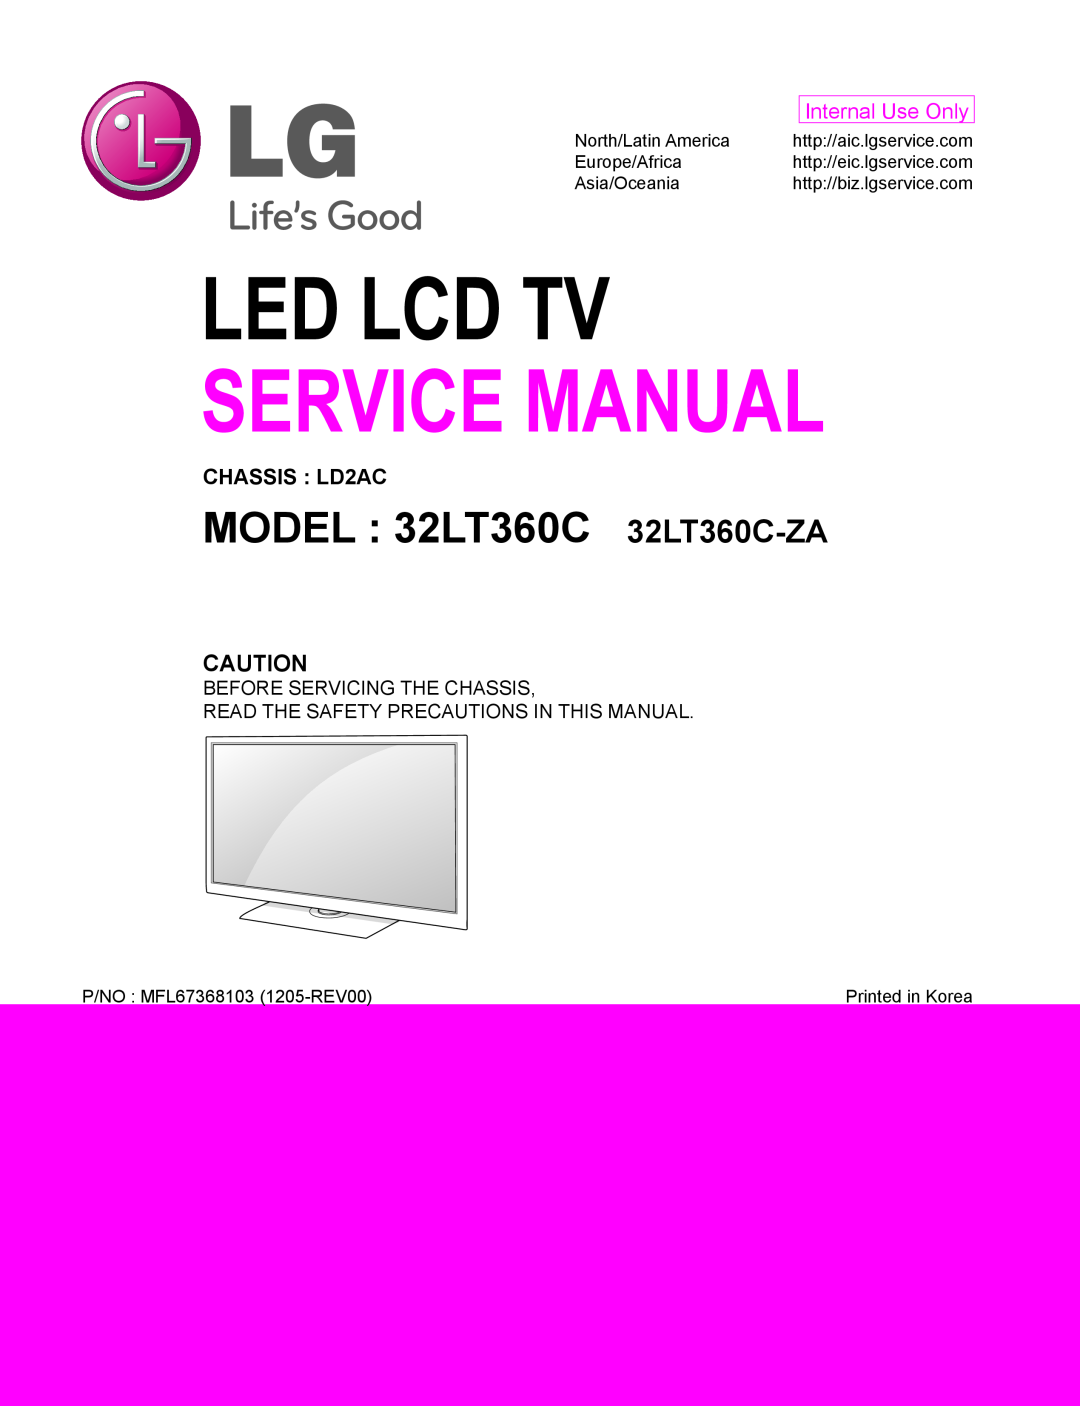 LG Electronics service manual Led Lcd Tv, Service Manual, MODEL 32LT360C 32LT360C-ZA, Internal Use Only, Europe/Africa 